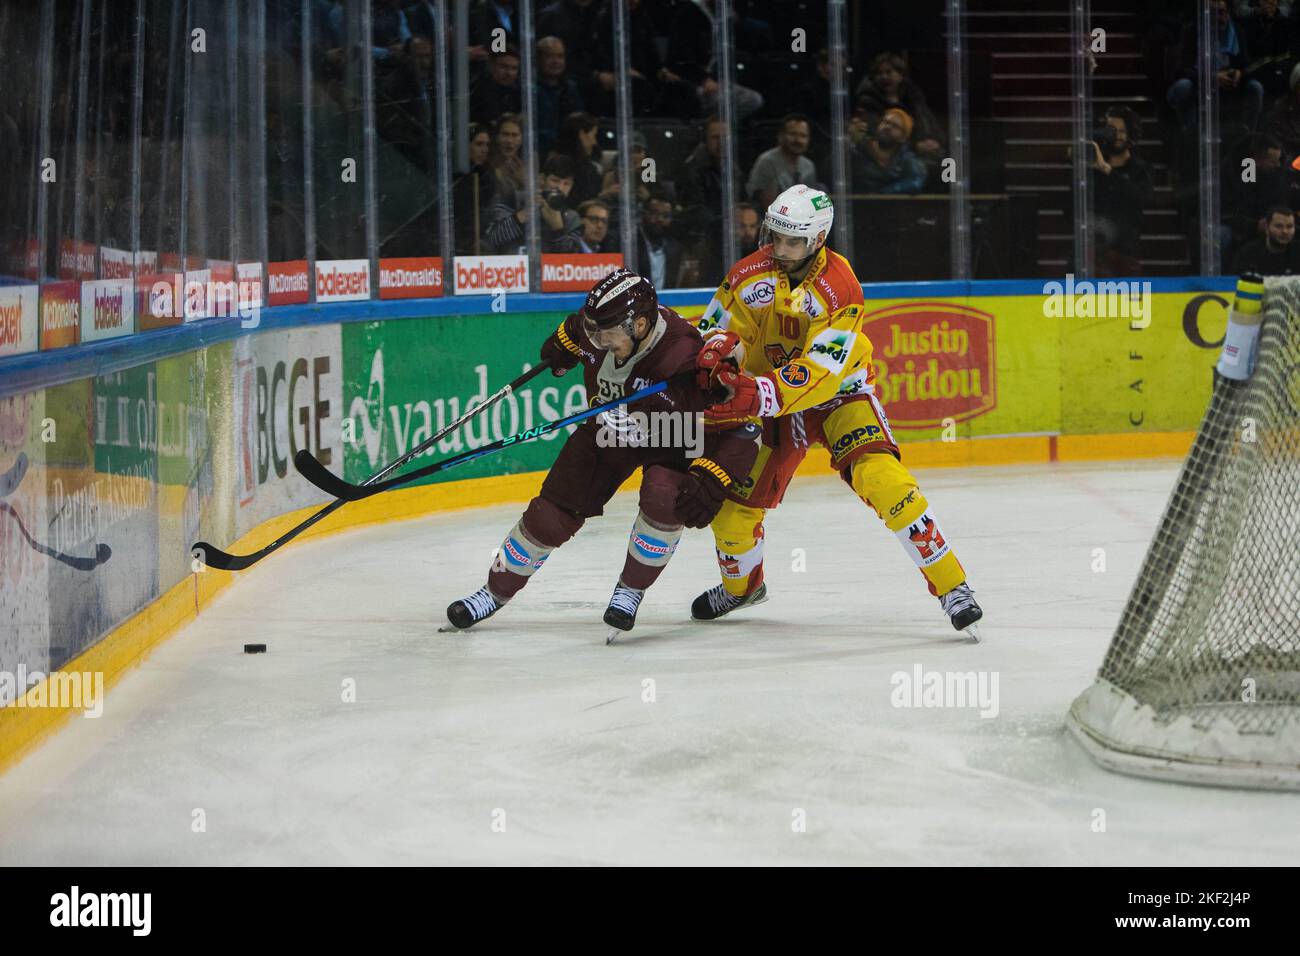 Golden Ticket Justin Bridou - Genève-Servette Hockey Club